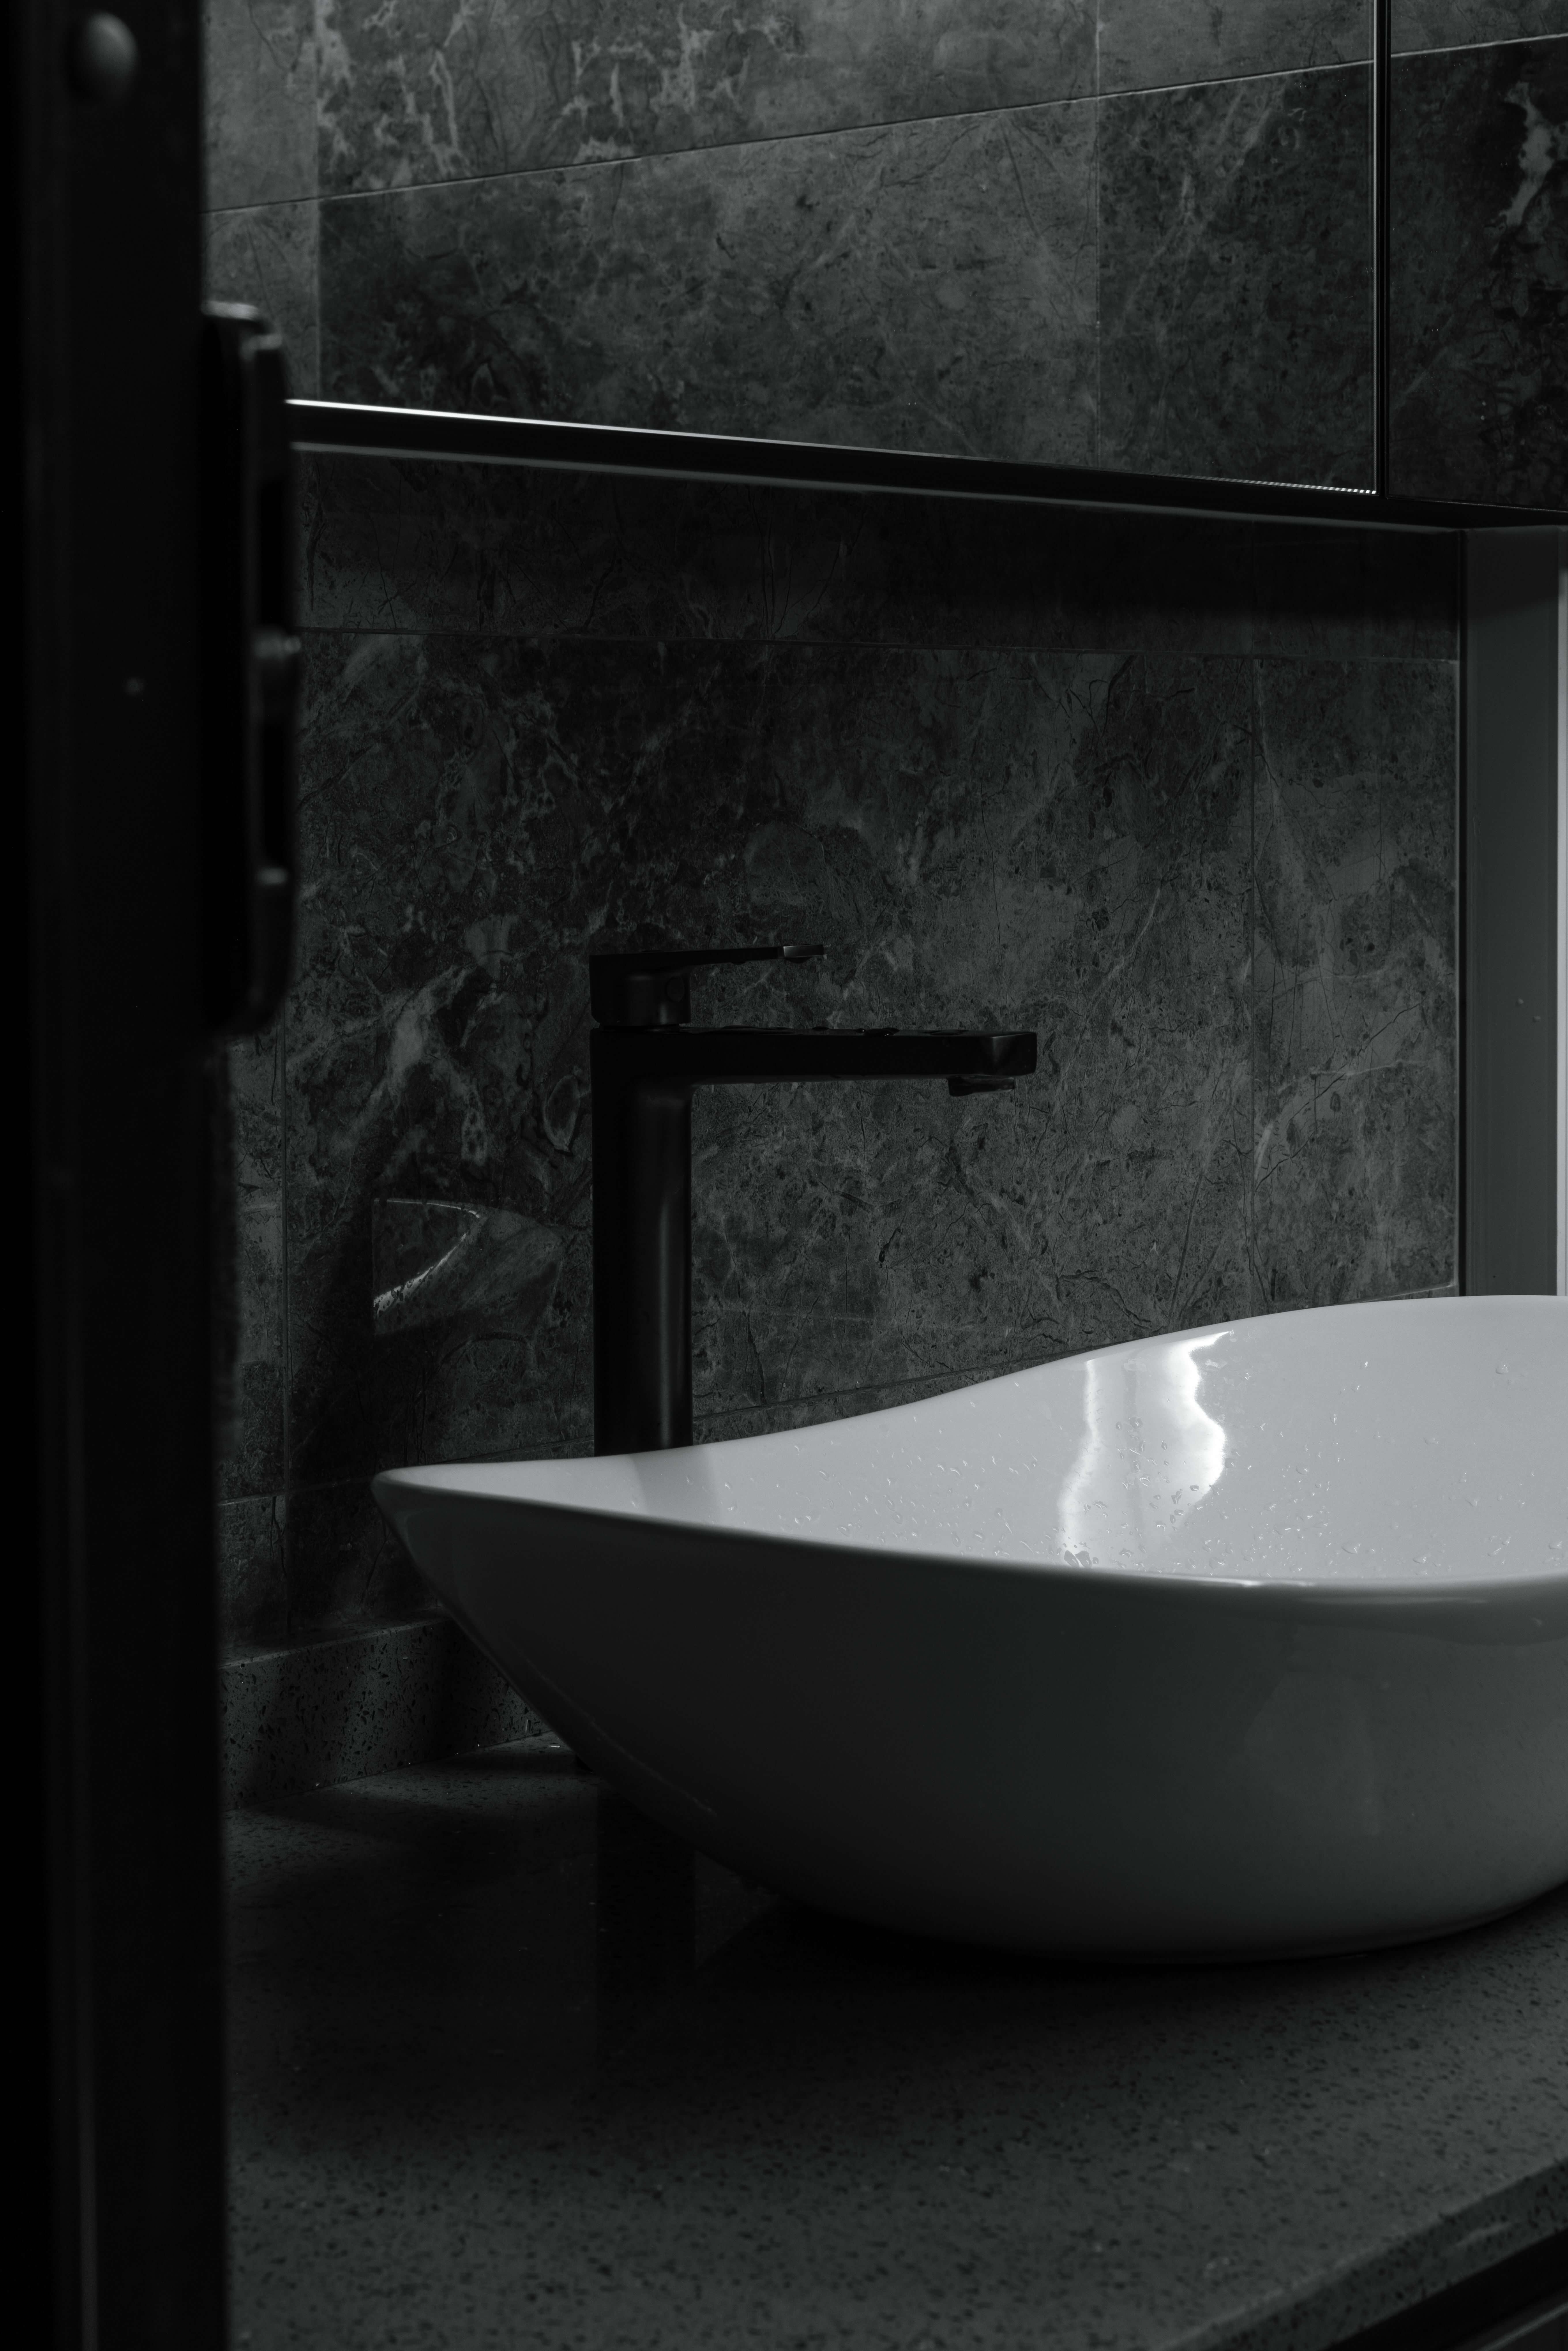 Minimalist black and white bathroom with a sleek porcelain sink